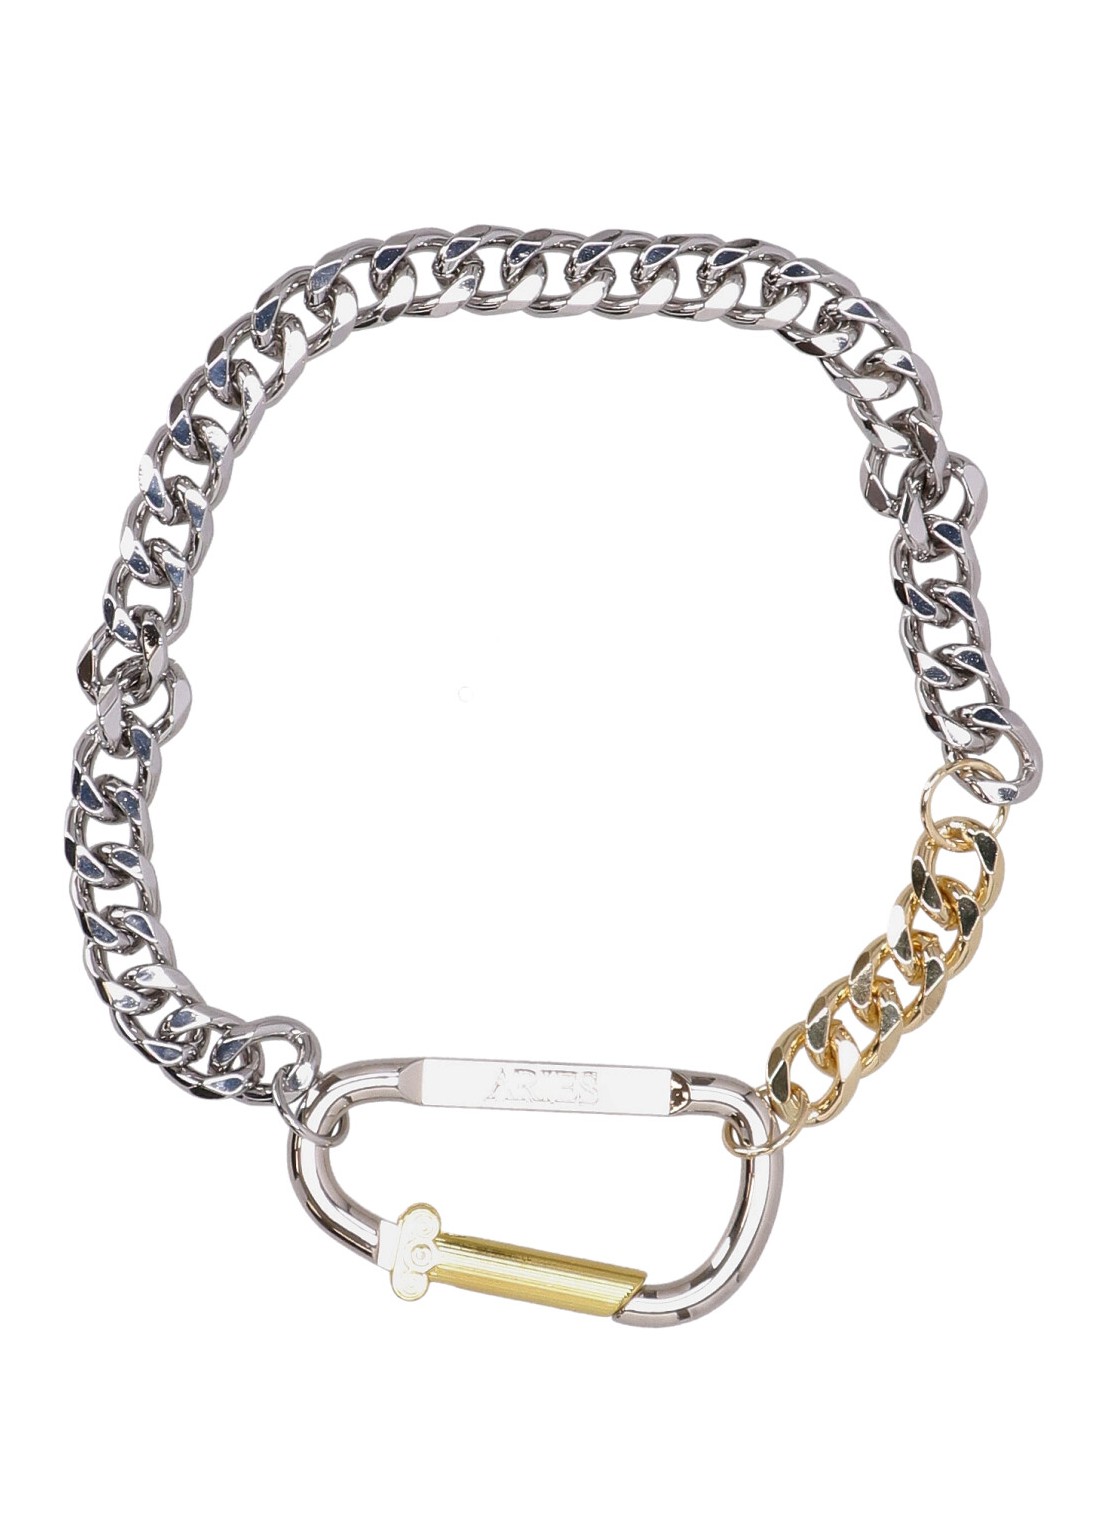 Collar aries collar mancolumn carabiner silver necklace - suar90163 sv talla S/M
 